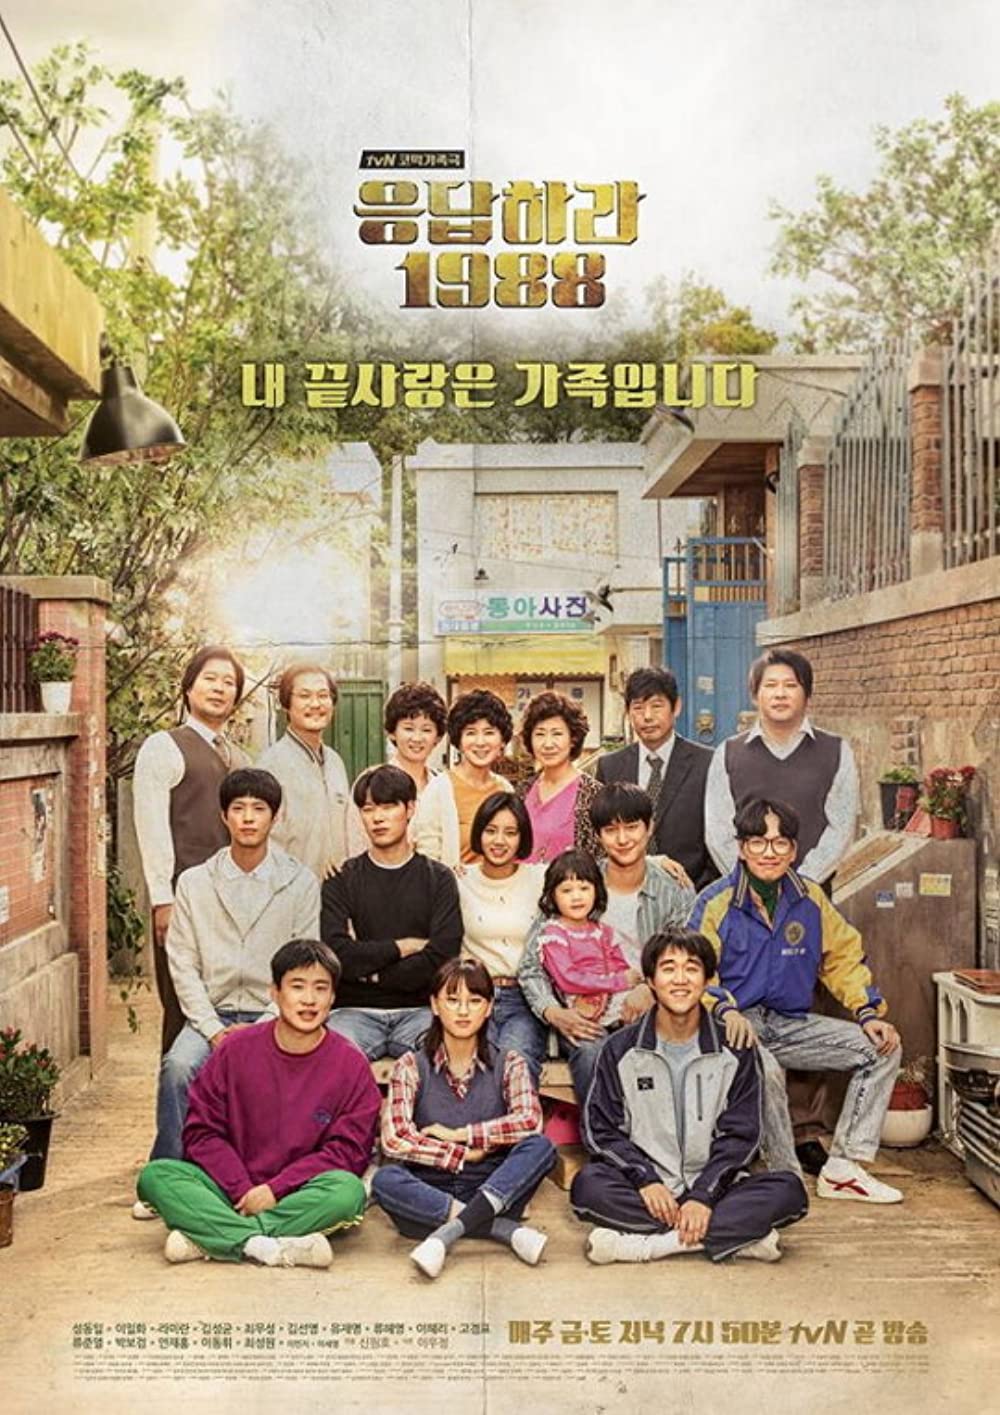 11 Drama Korea dengan rating tertinggi sepanjang masa, ada Reply 1988